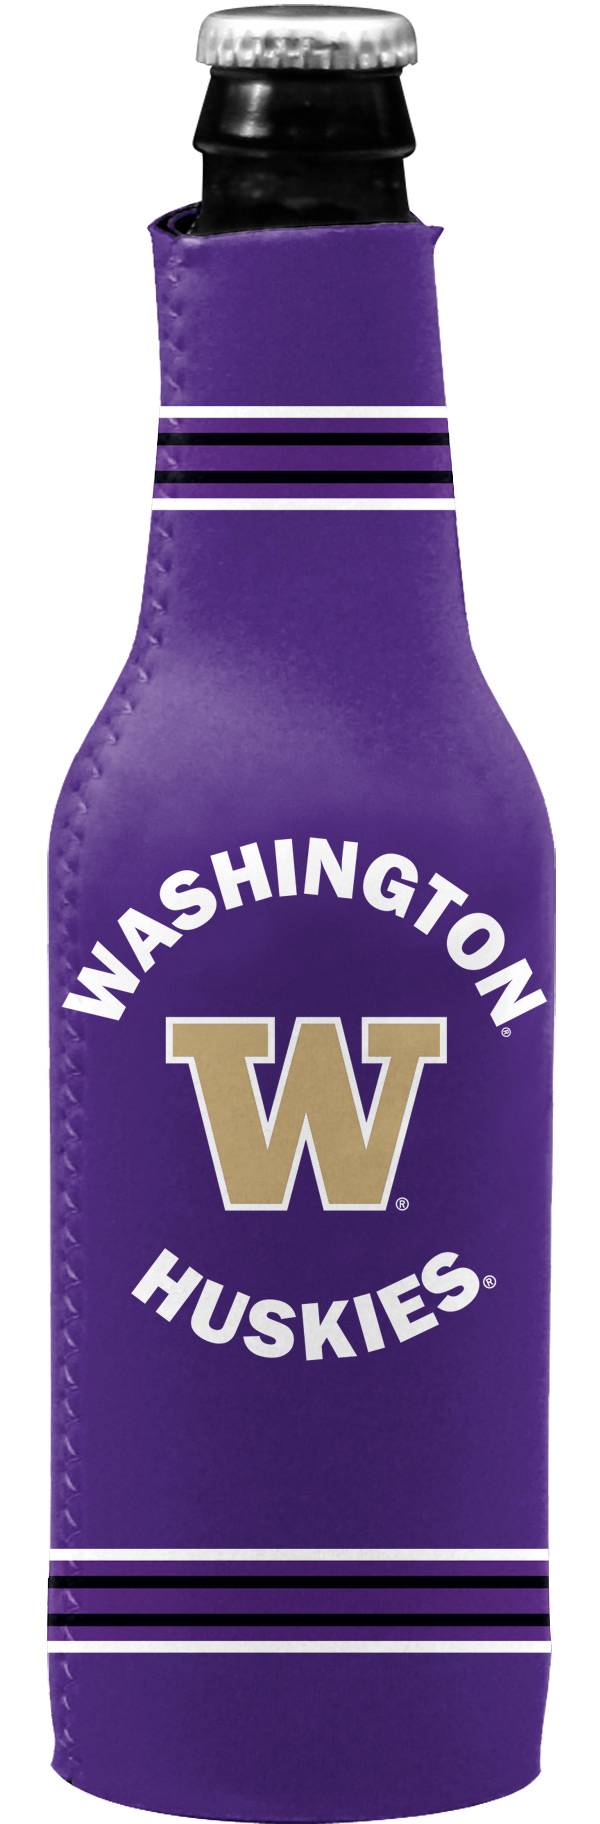 Washington Huskies Bottle Koozie product image